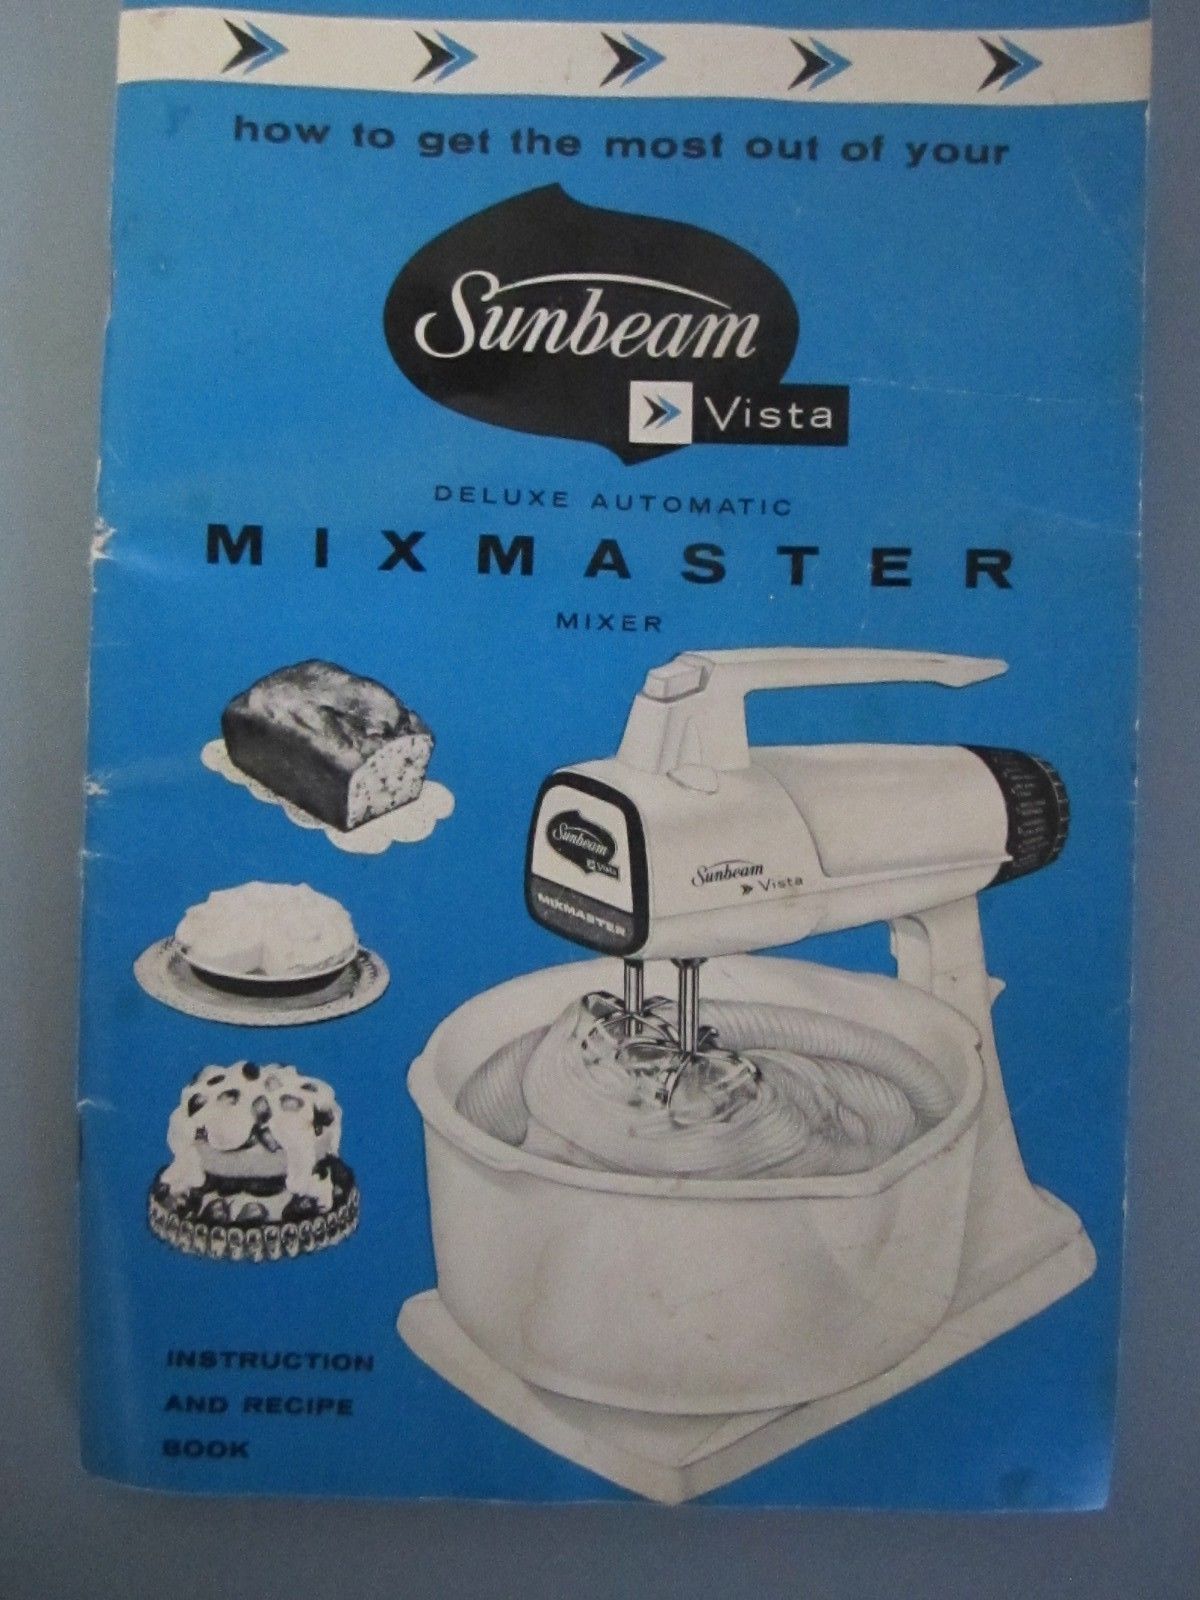 Sunbeam Mixmaster Love — Sunbeam Mixmaster Attachments List w/pics (that